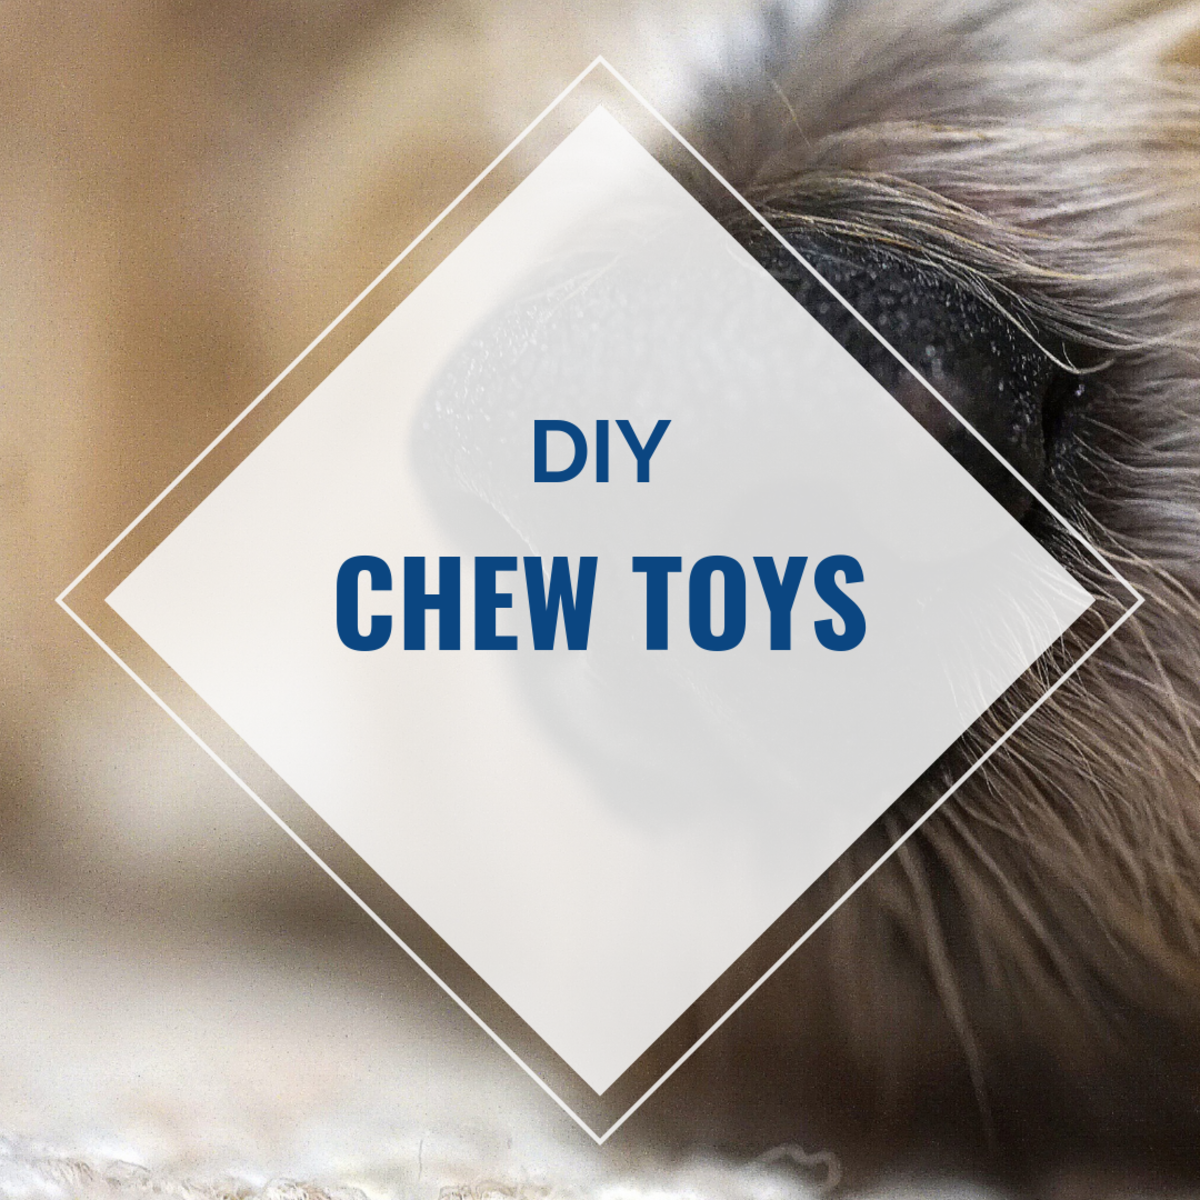 DIY Chew Toys